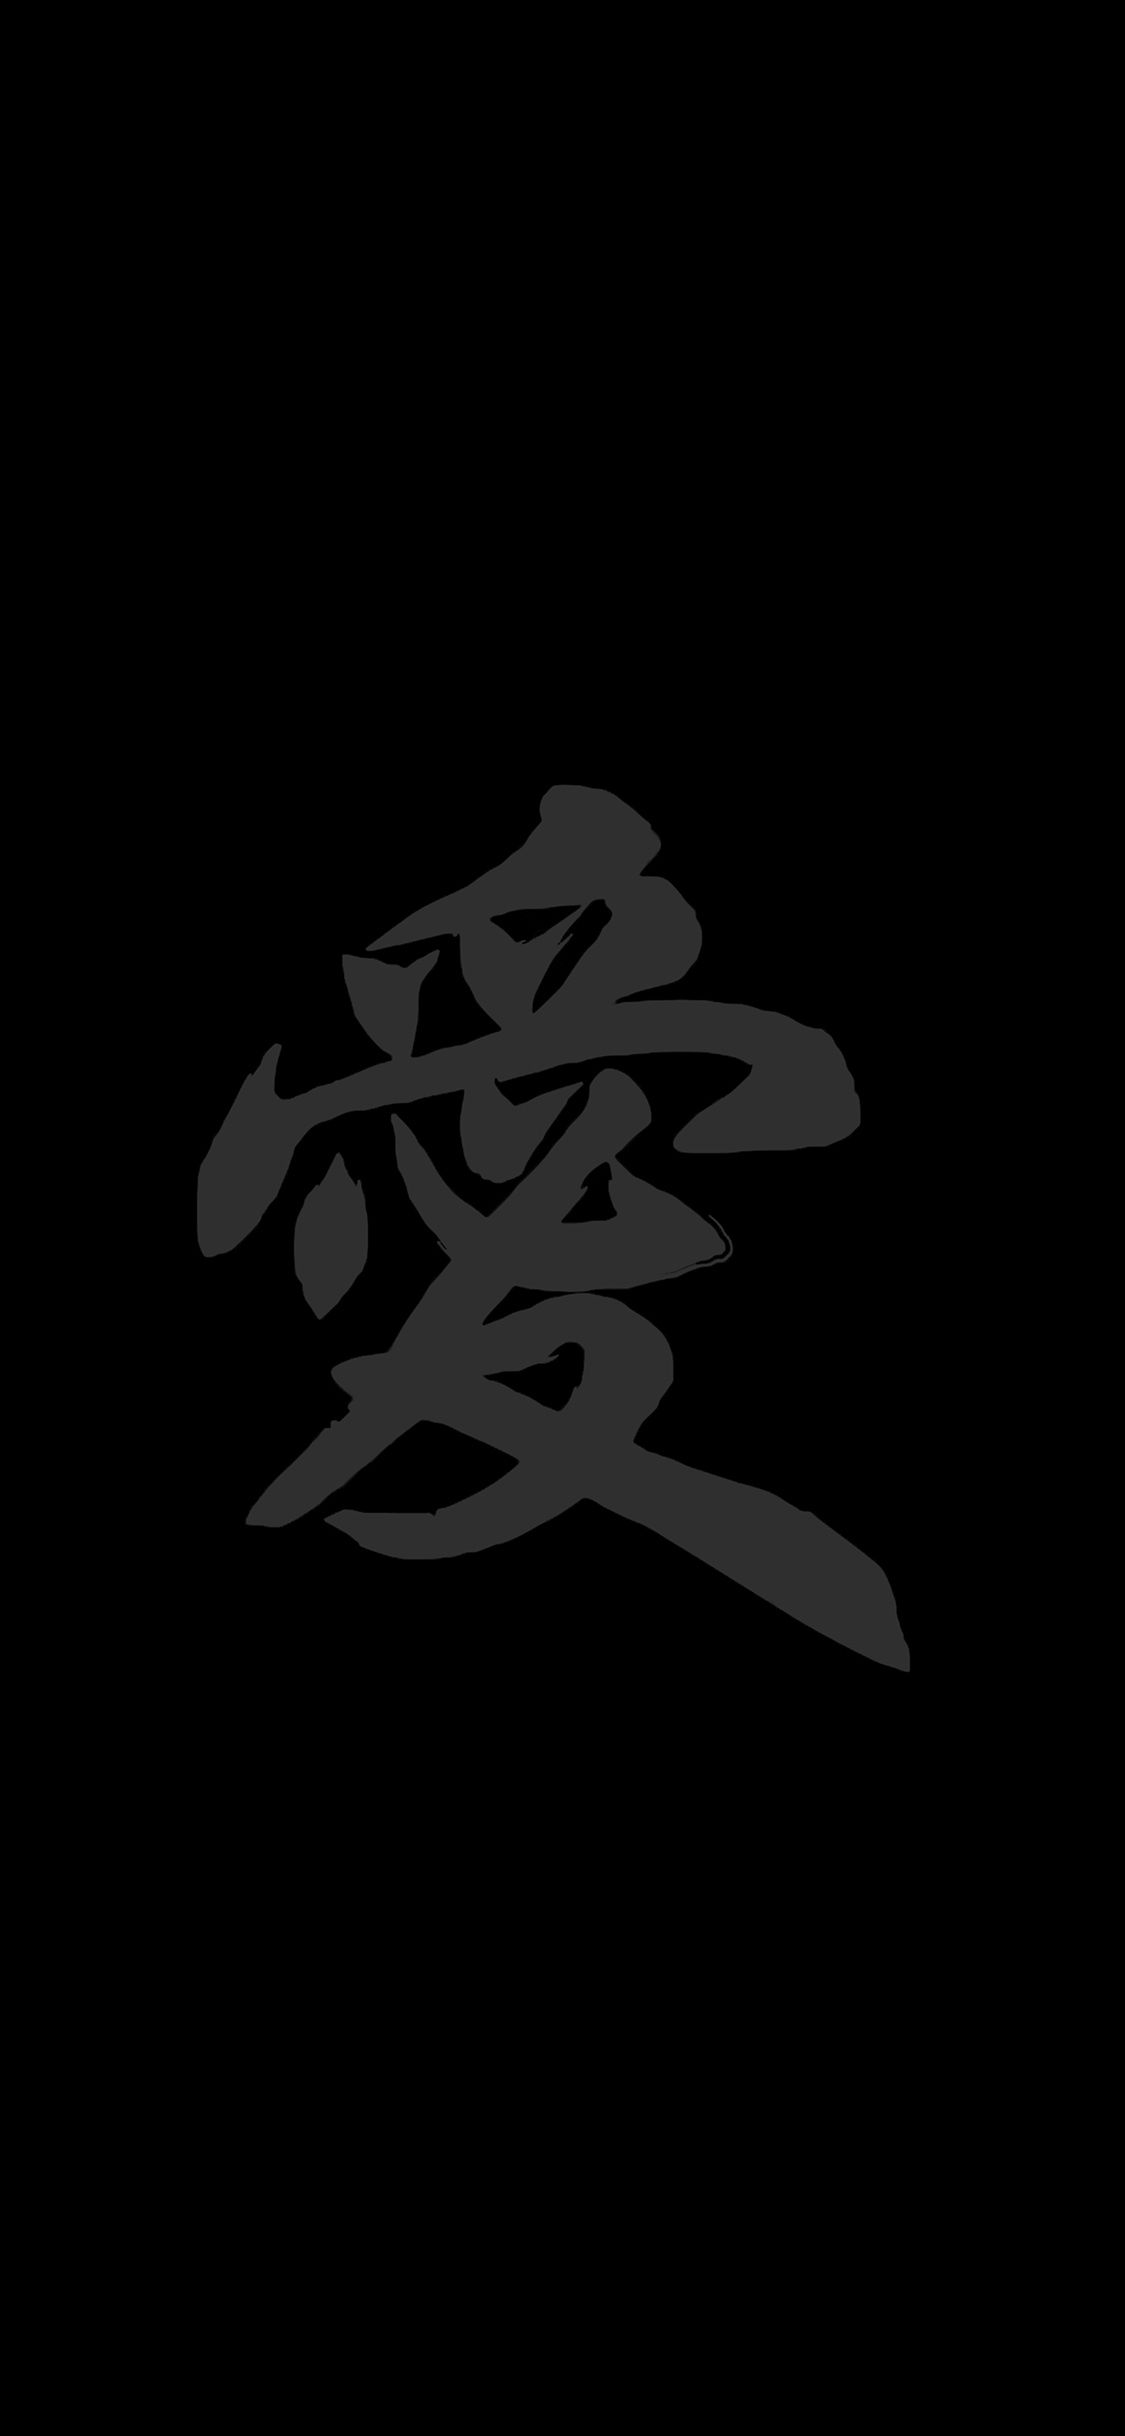 iPhone X wallpaper. love chinese letter minimal dark bw